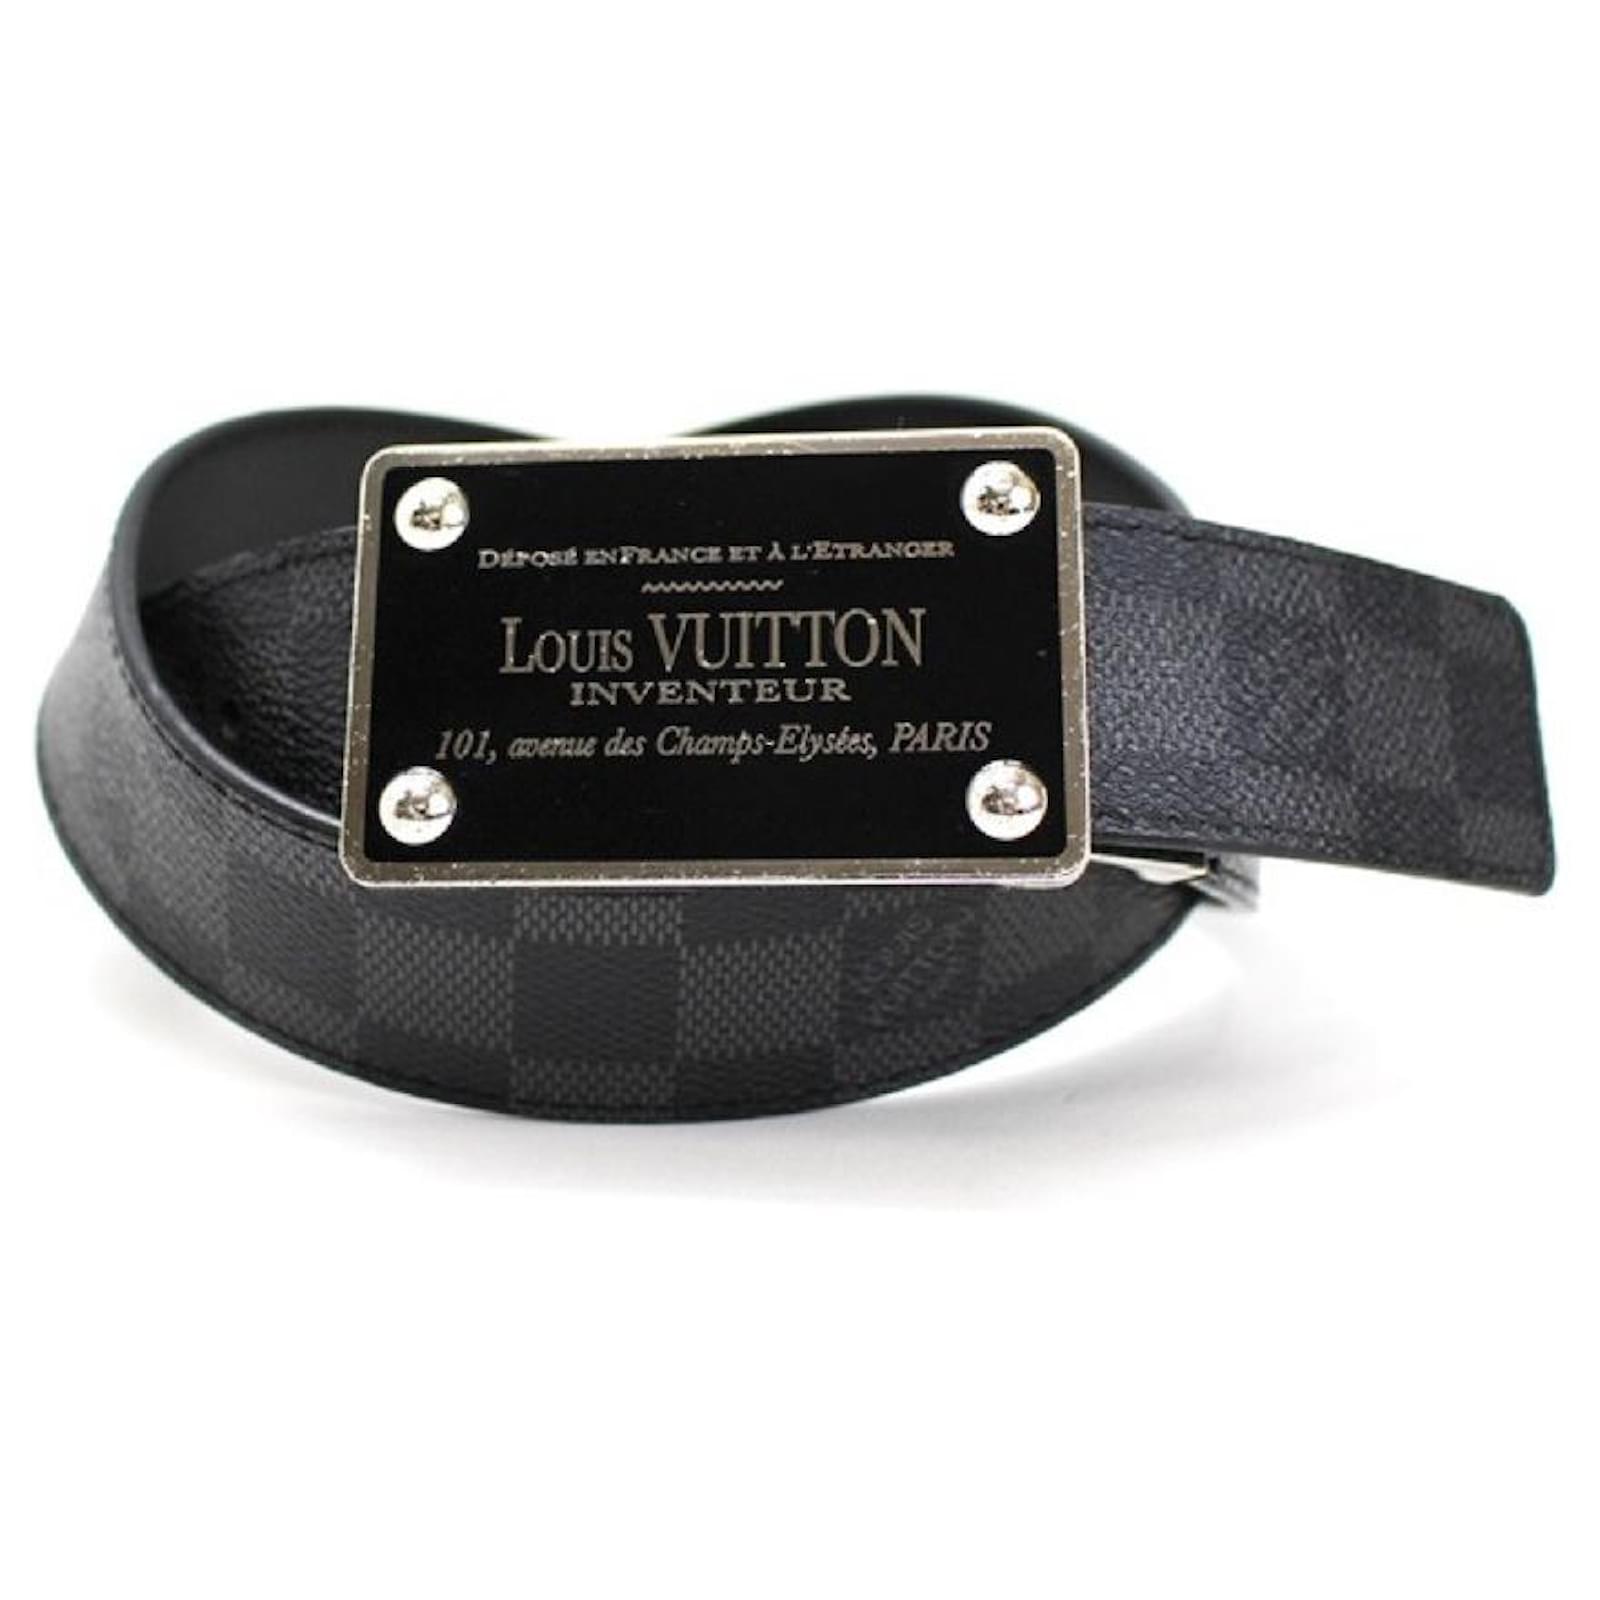 letresor.bdg - Louis Vuitton stola nera Composizione 60%